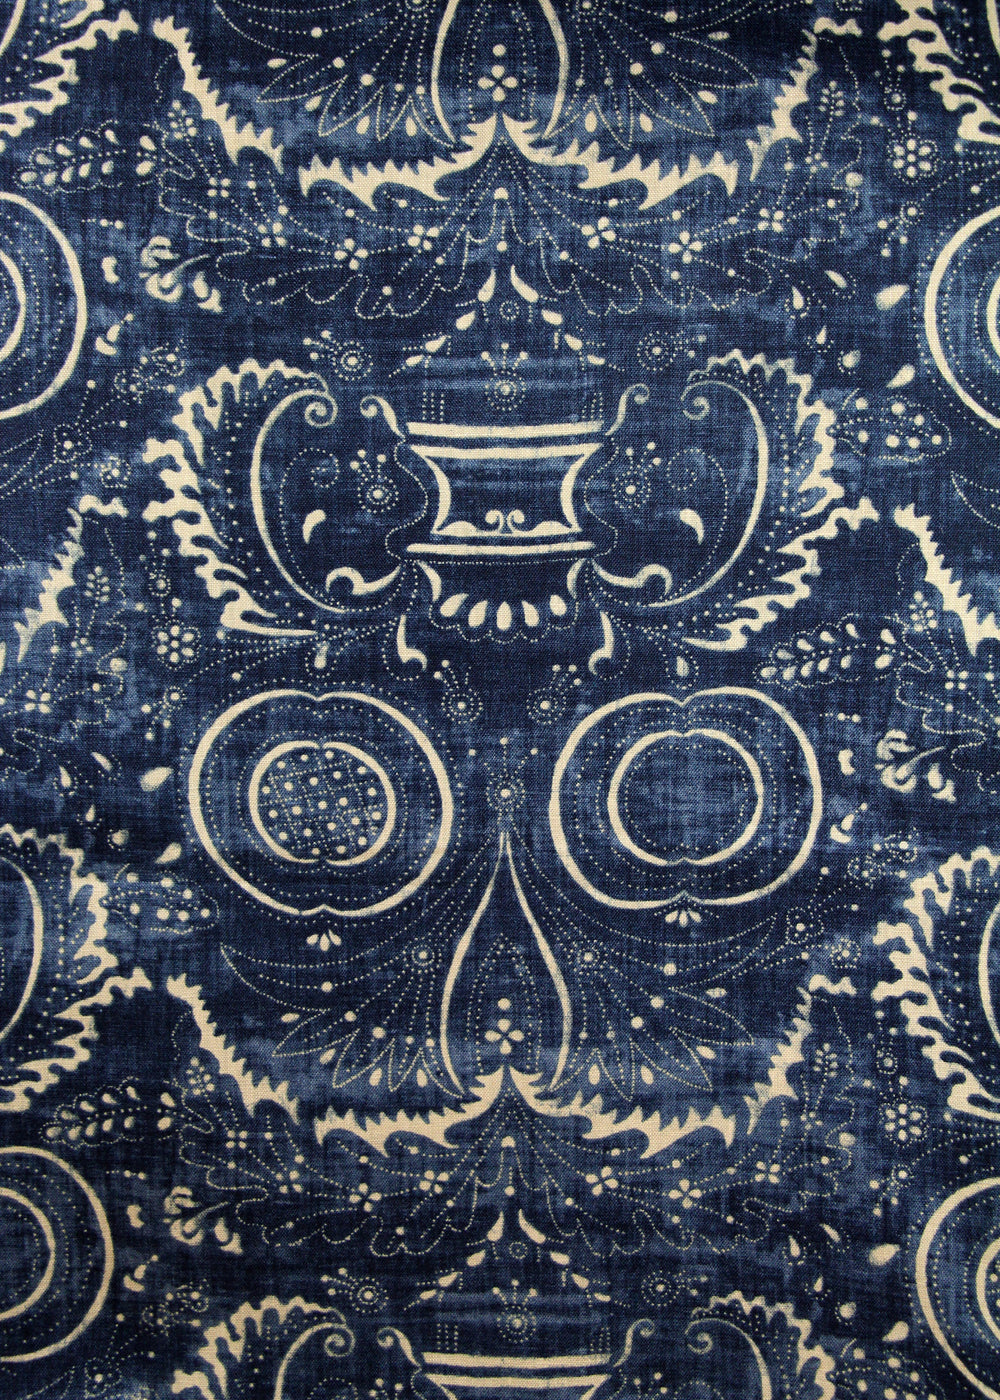 dark blue fabric with a swirly printed pattern